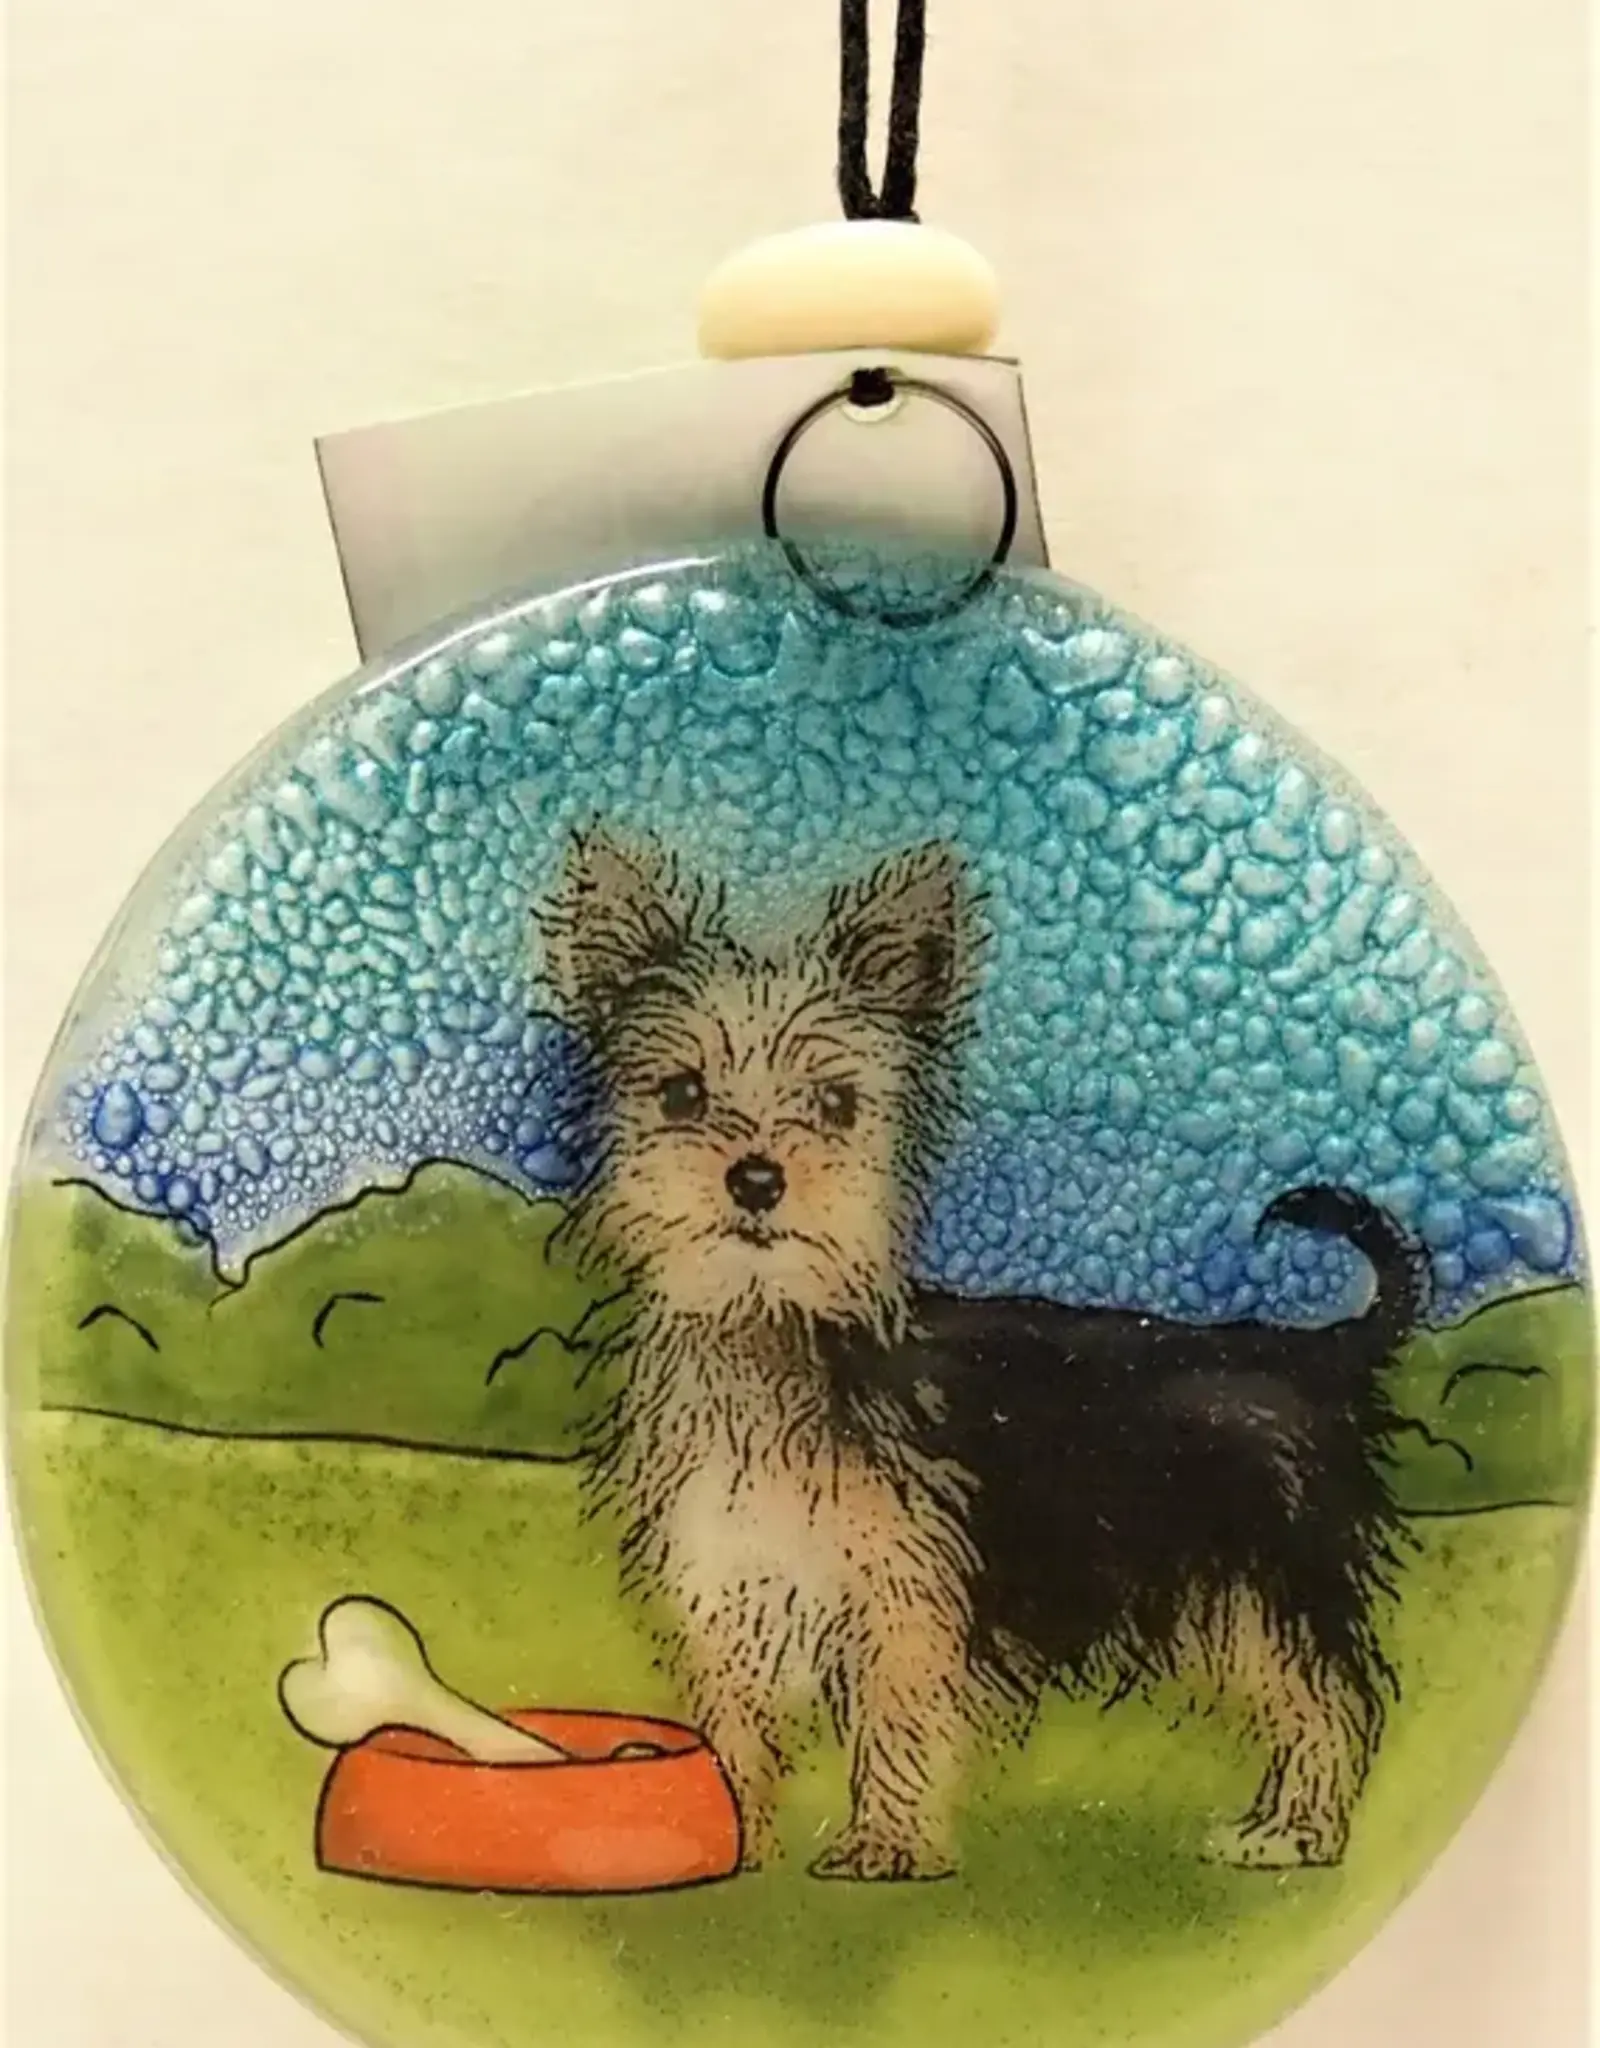 Pampeana Yorkshire Dog Ornament